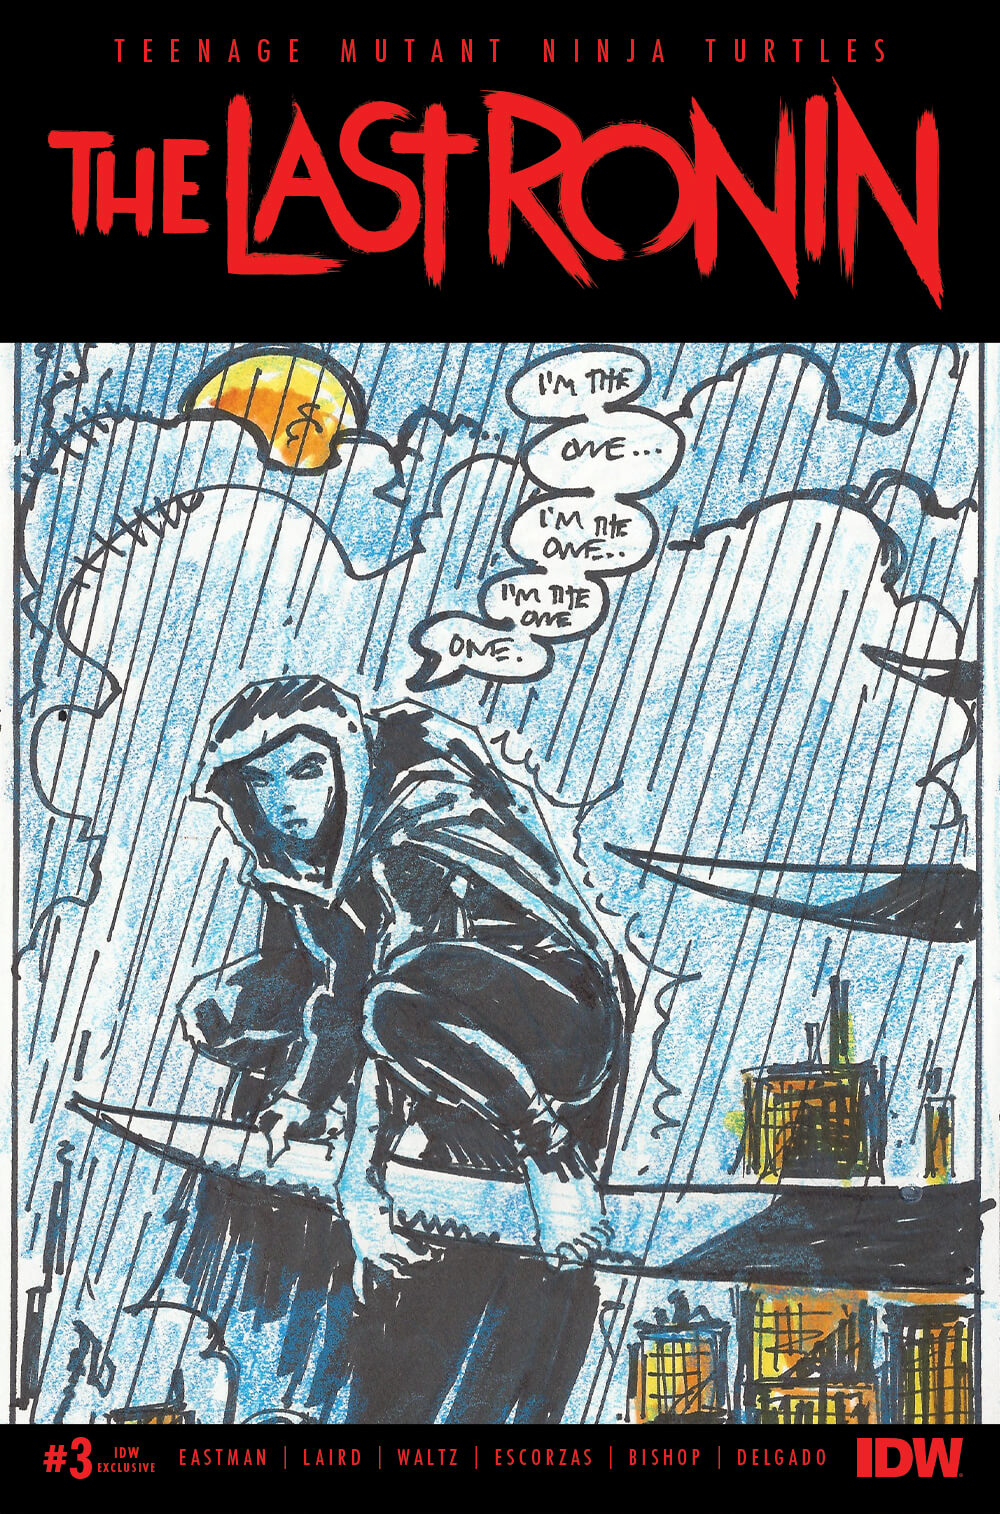 Teenage Mutant Ninja Turtles: The Last Ronin #3 (Reissue) IDW Exclusive